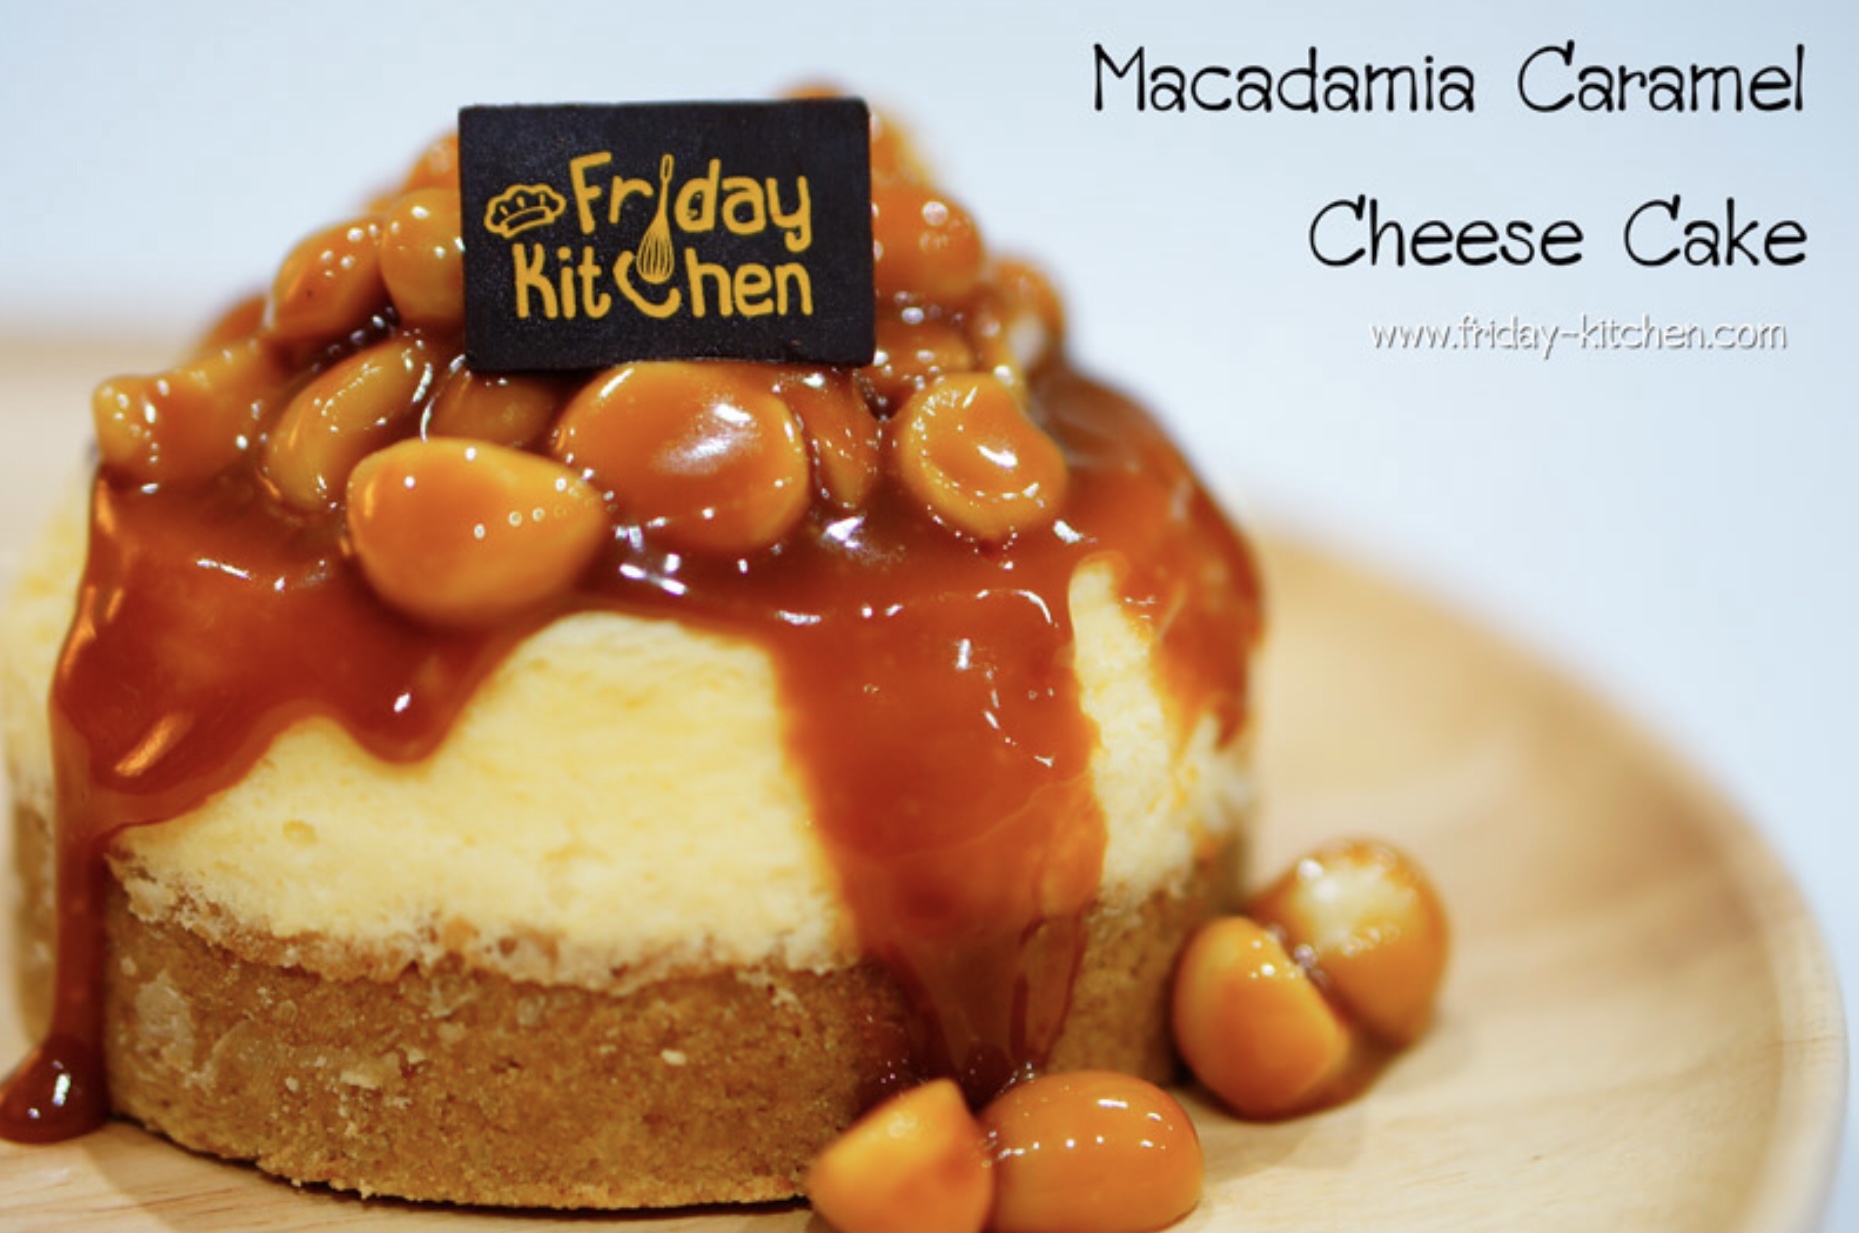 Macadamia Caramel Cheese Cake